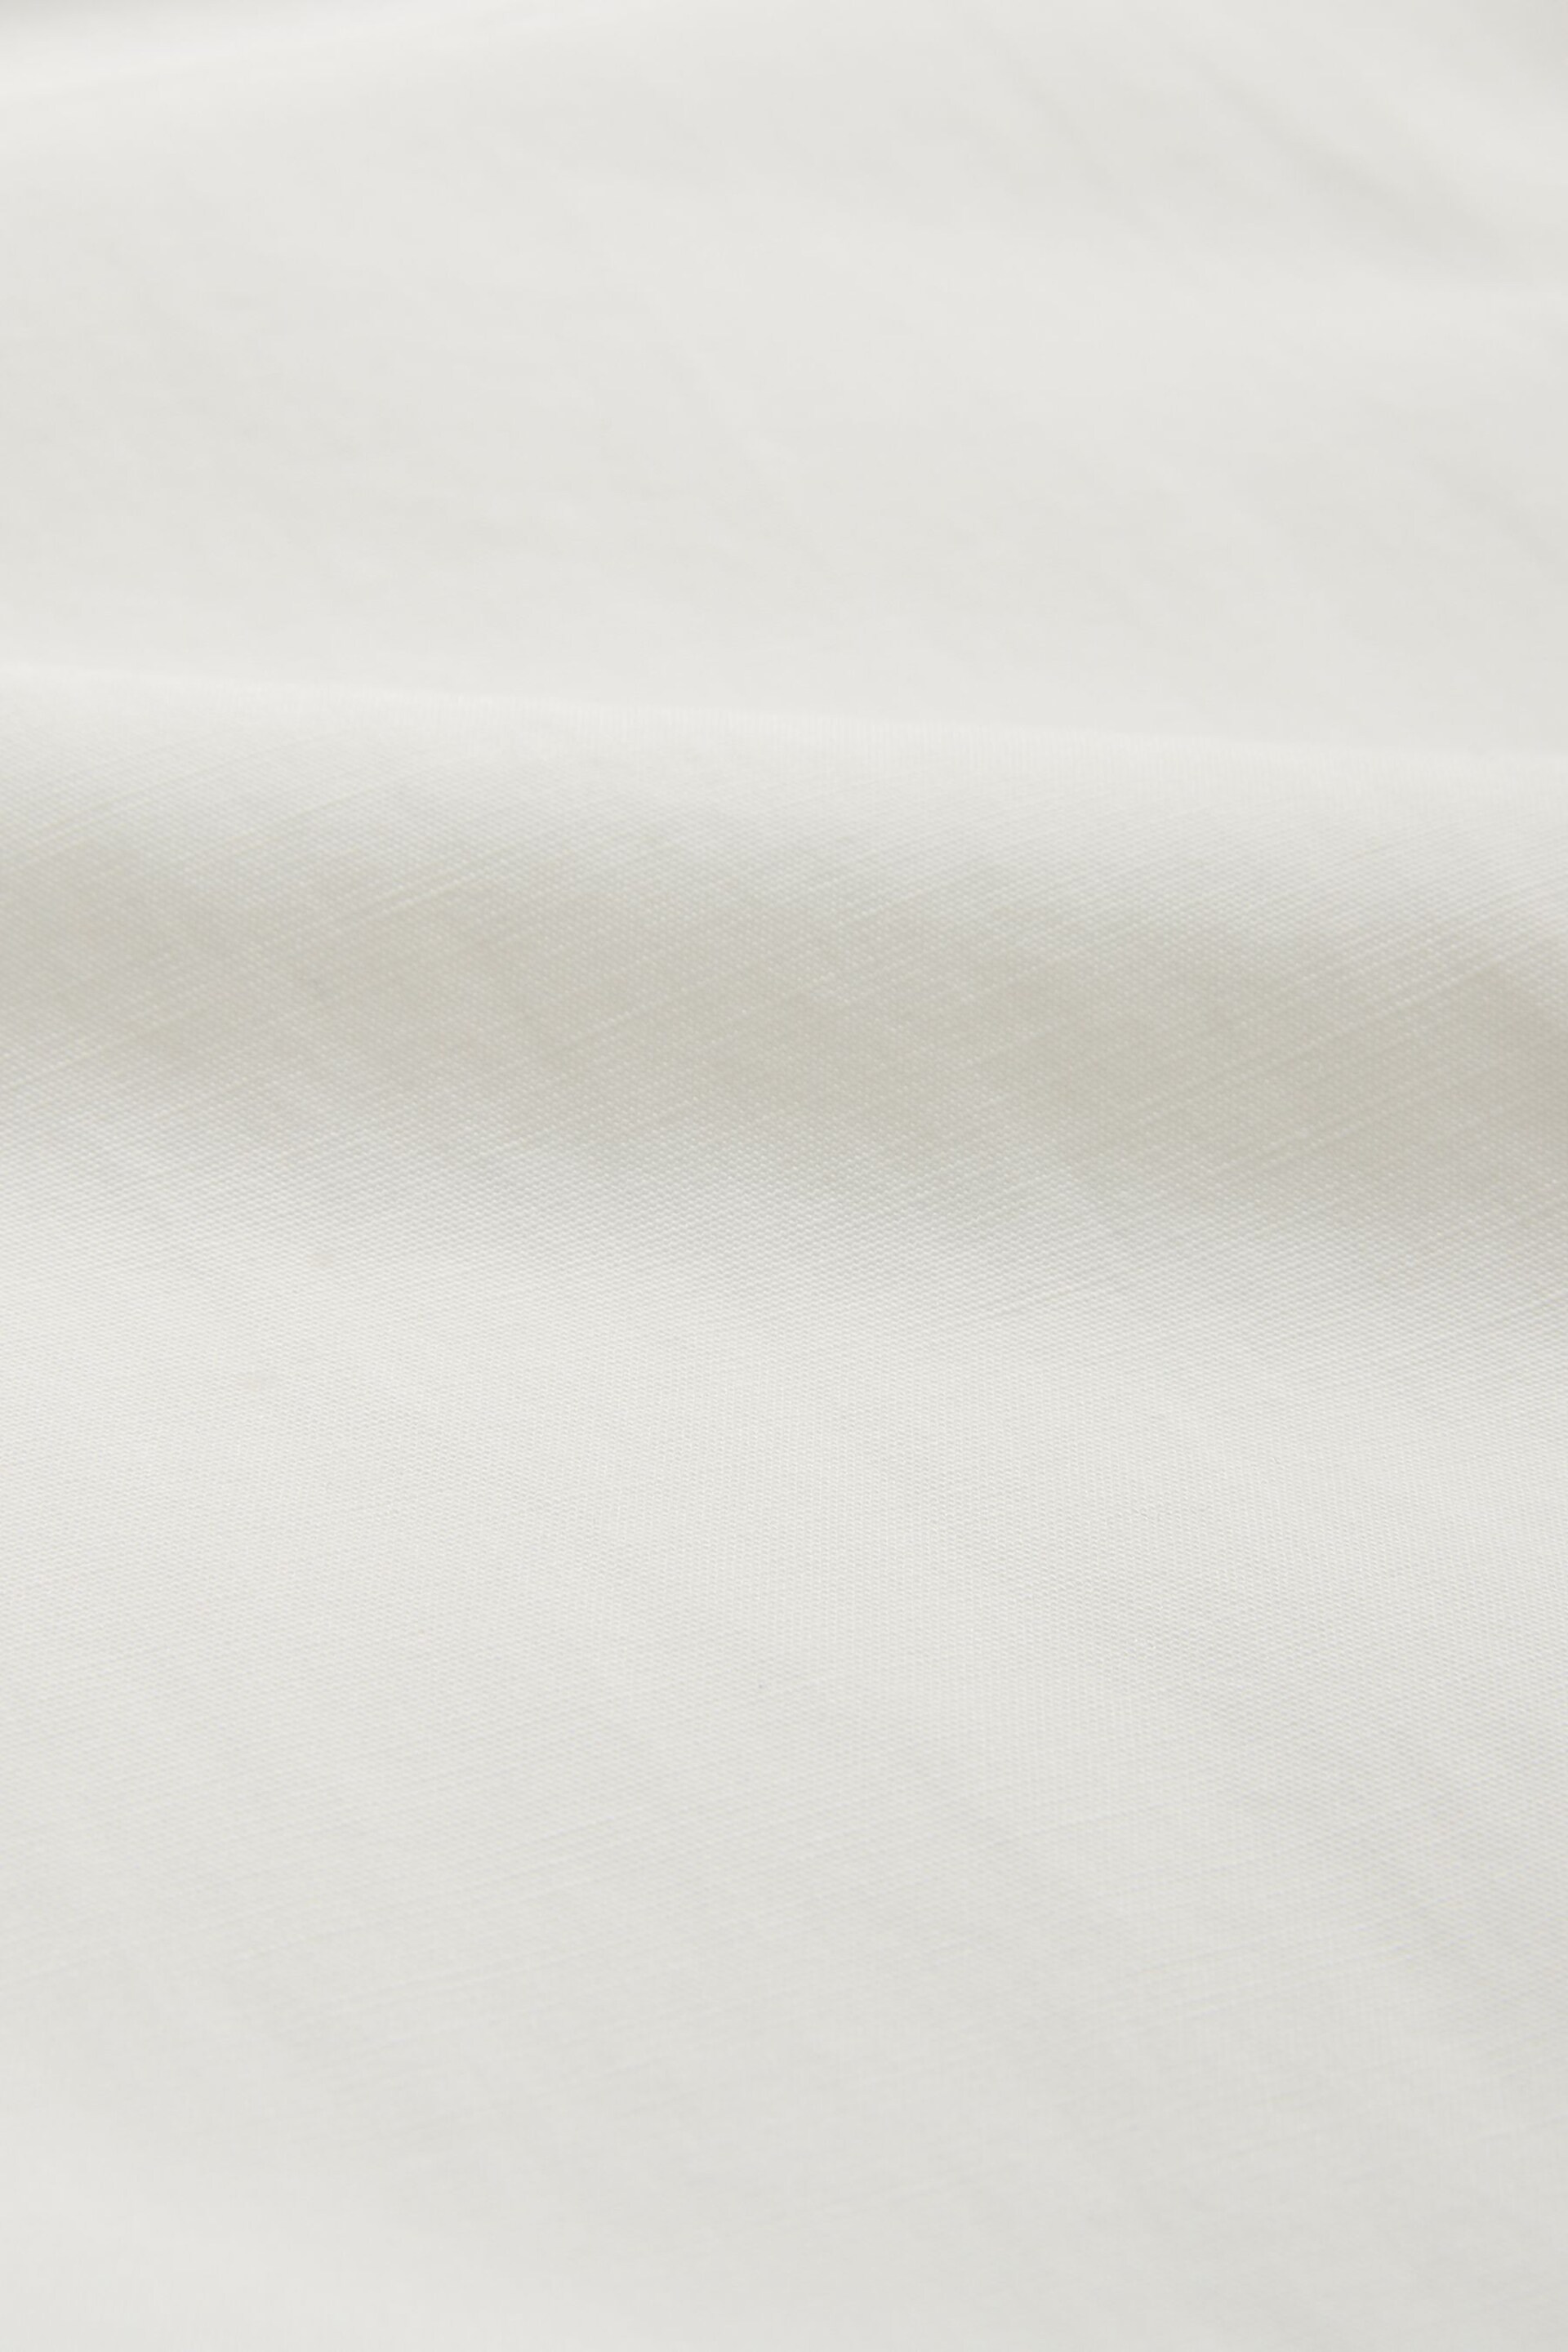 Celtic & Co. Linen Blend Relaxed White Blouse - Image 7 of 7